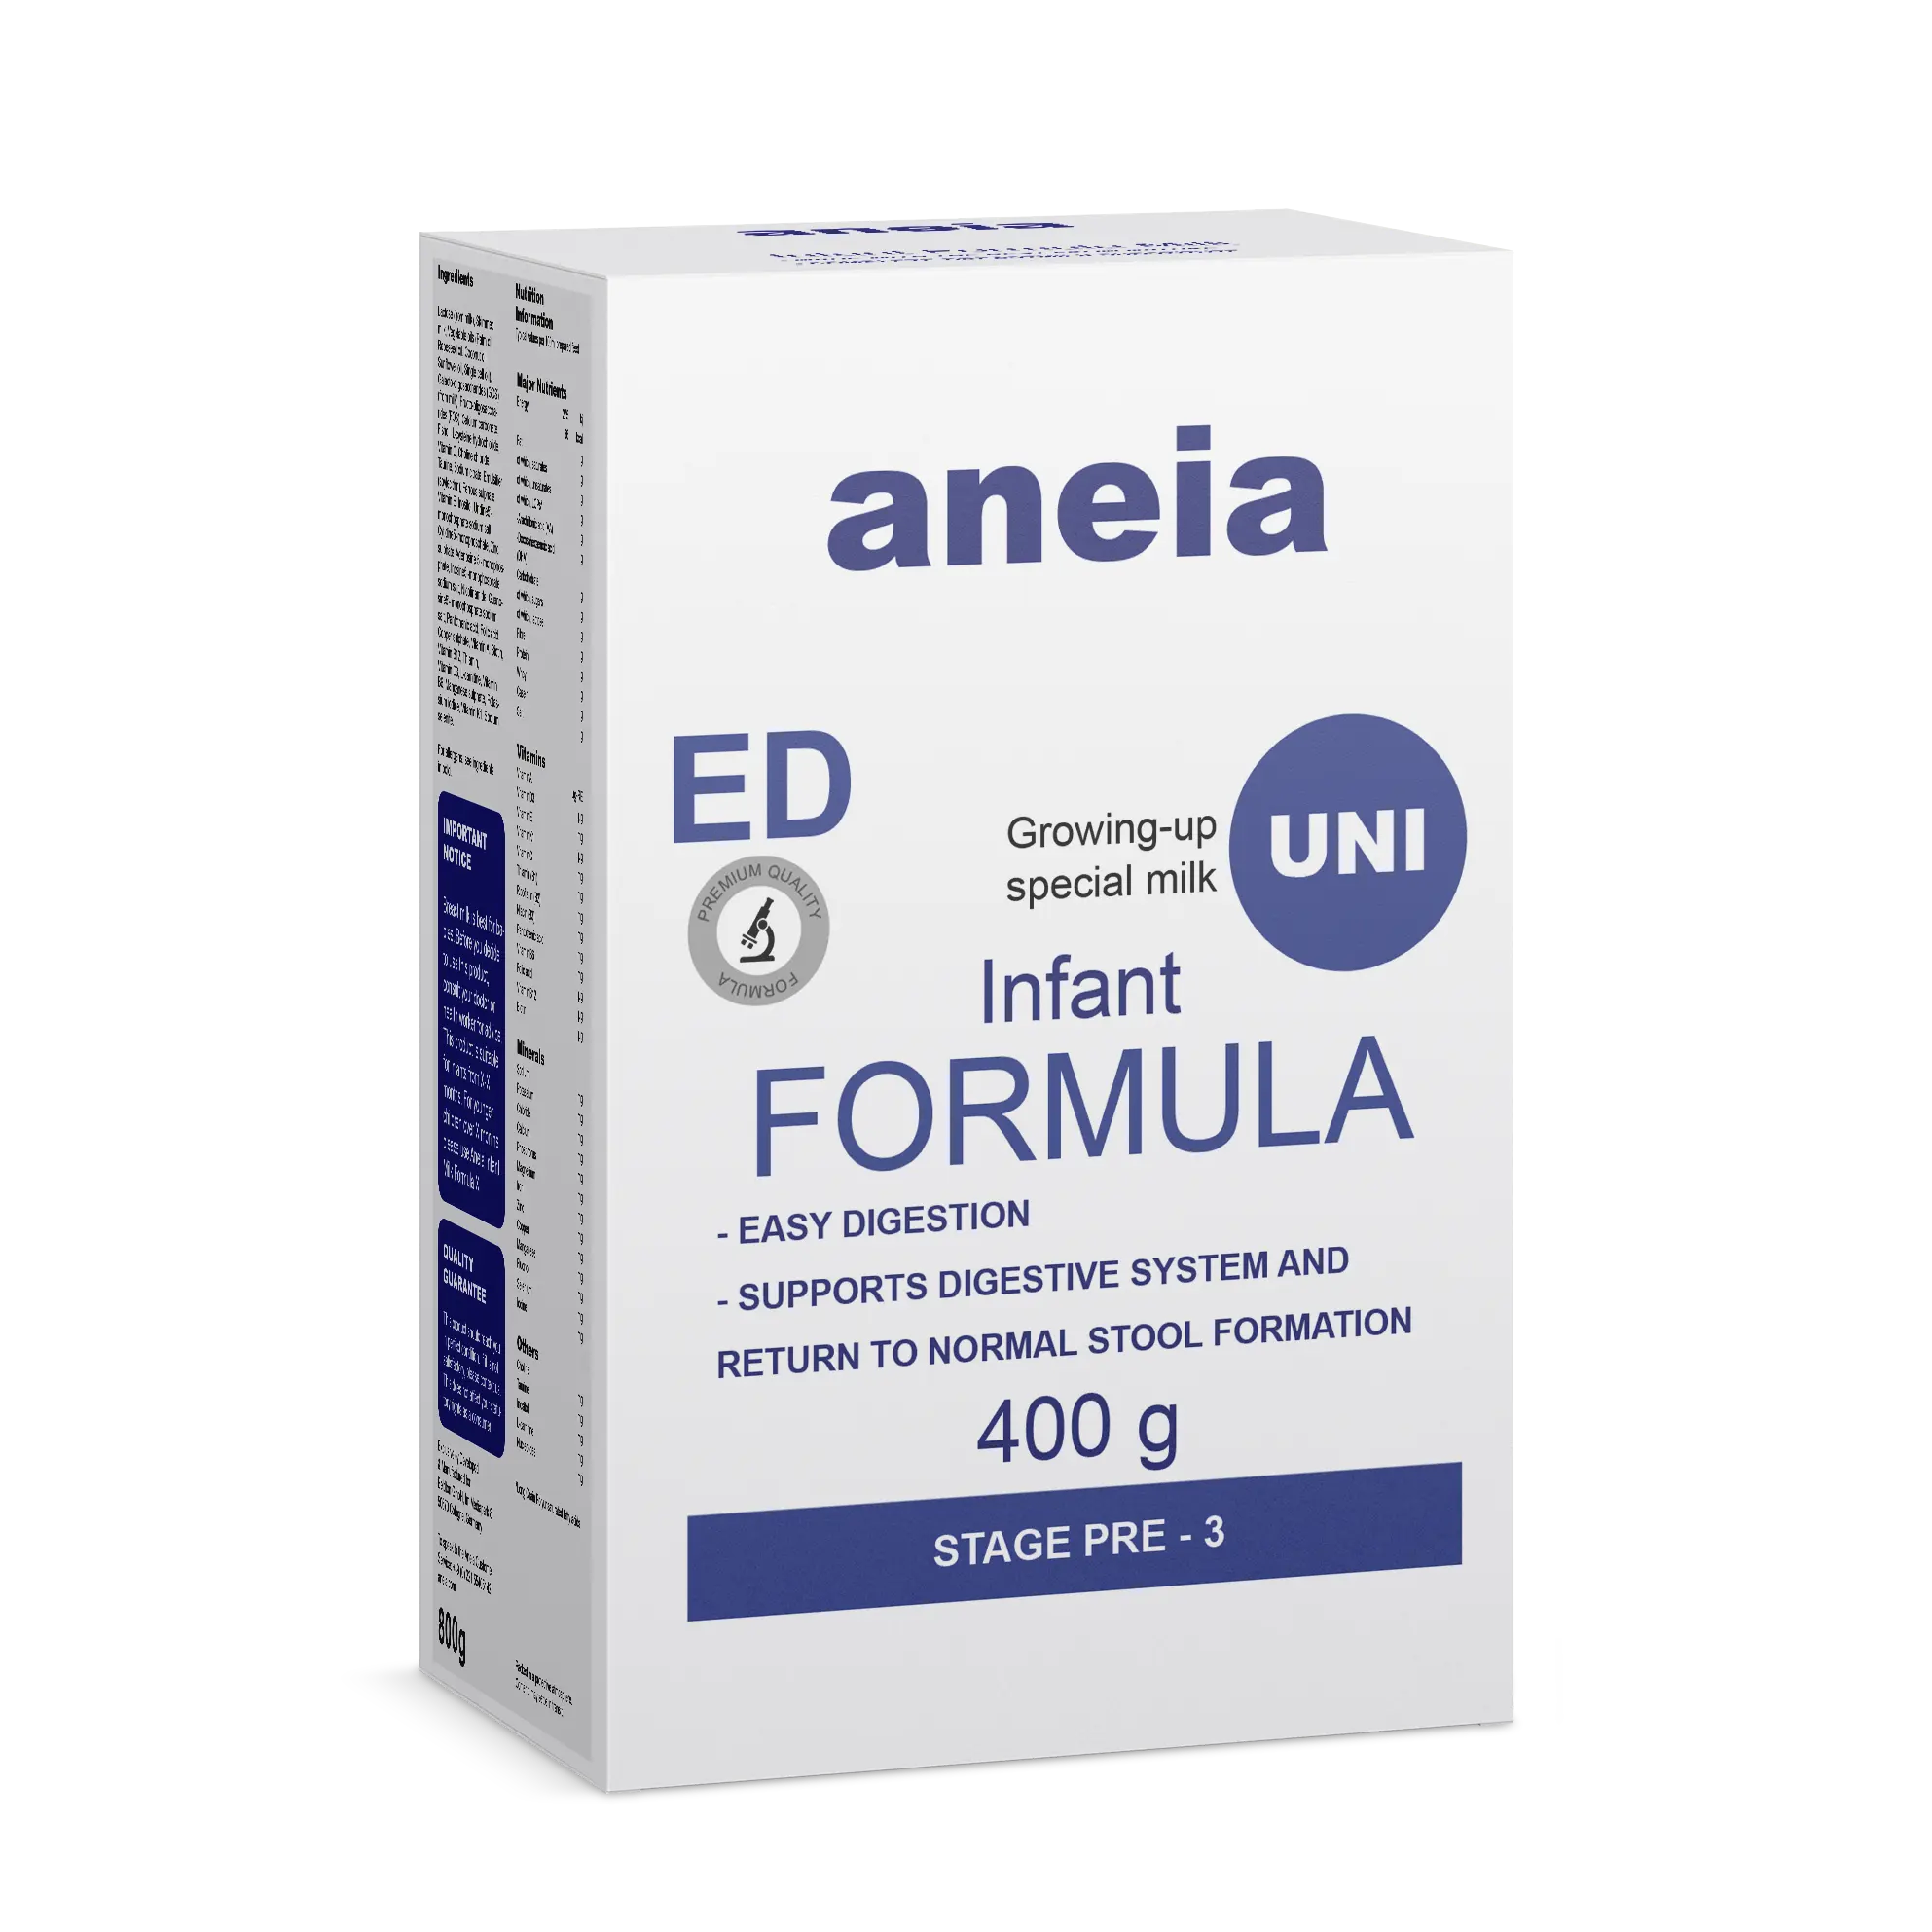 Aneia Baby First Infant Milk Formula Powder Easy Digestion低刺激性アレルギー400 g食事ダイエット食品OEMOBMプライベートラベル